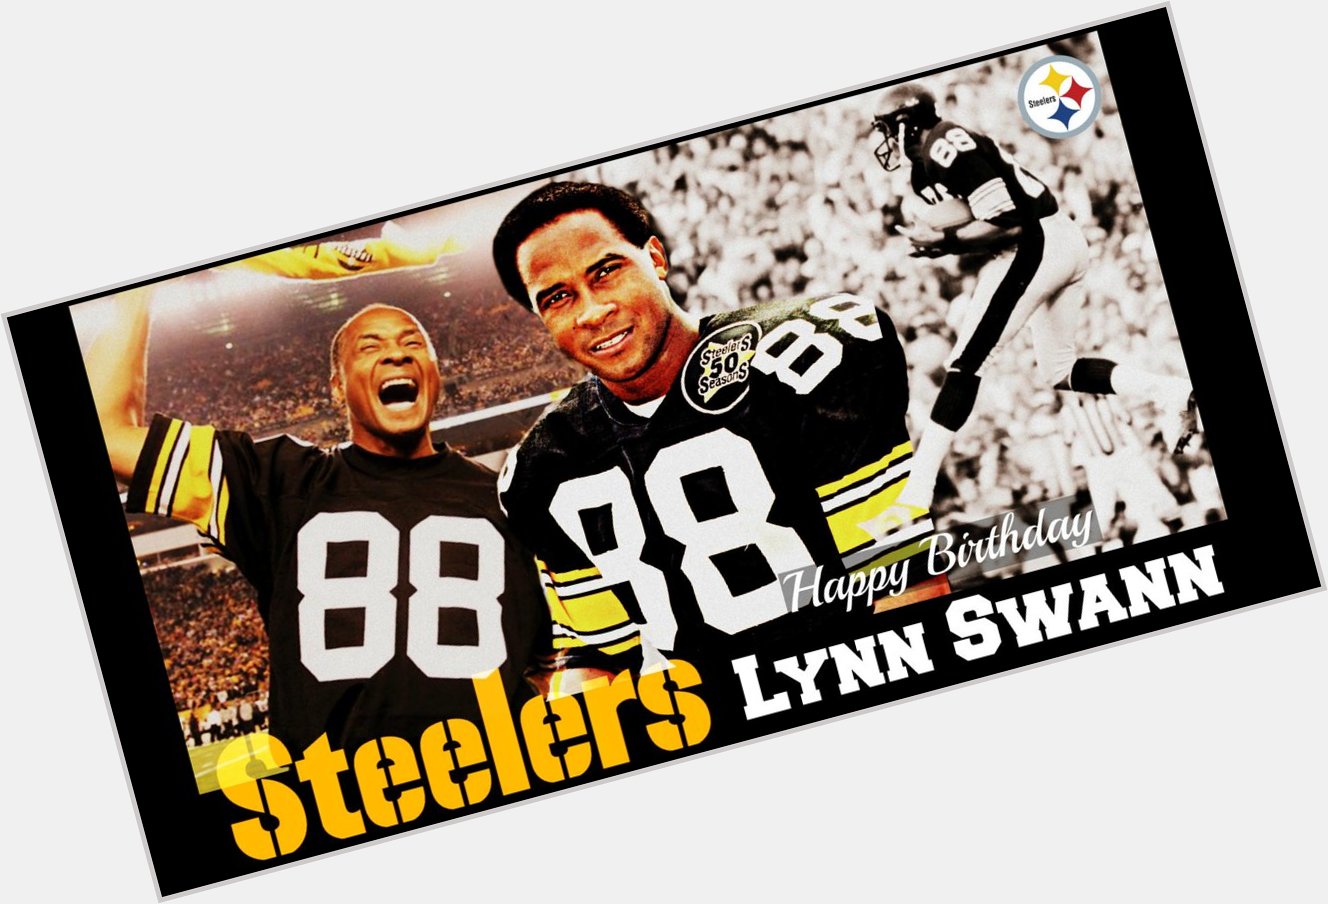 Wishing Steelers 4× Super Bowl Champion, Hall of Famer, Lynn Swann a very Happy 63rd BDay!  